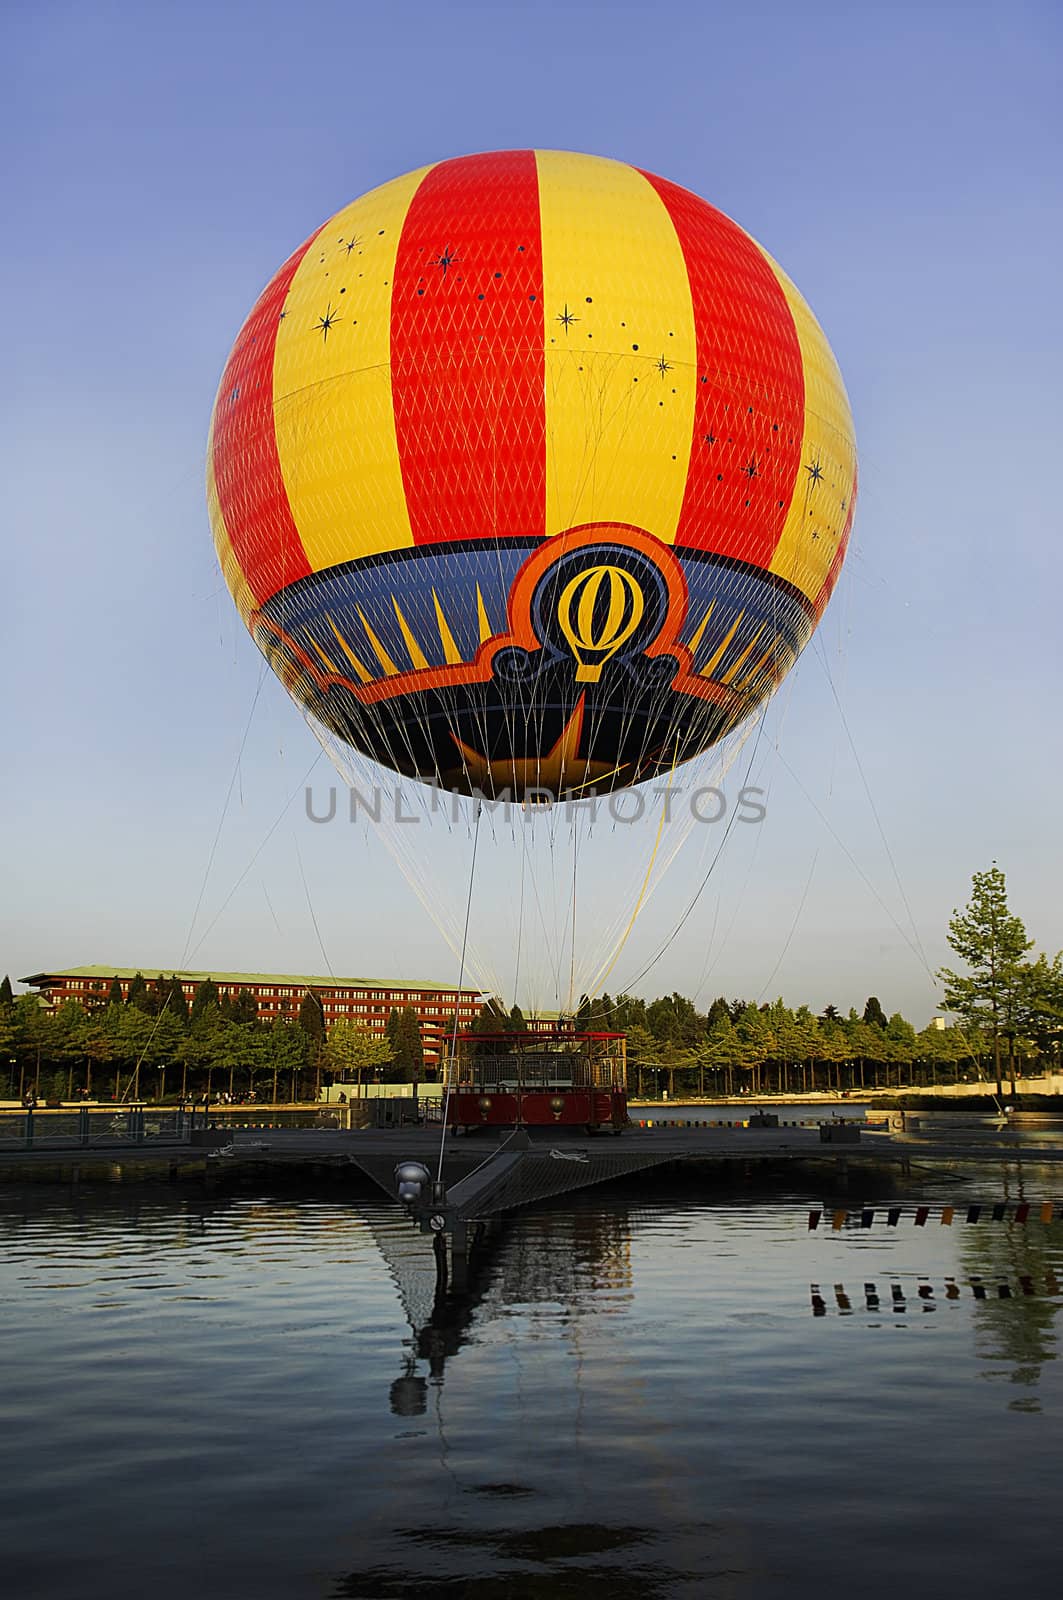 colorful air balloon by irisphoto4